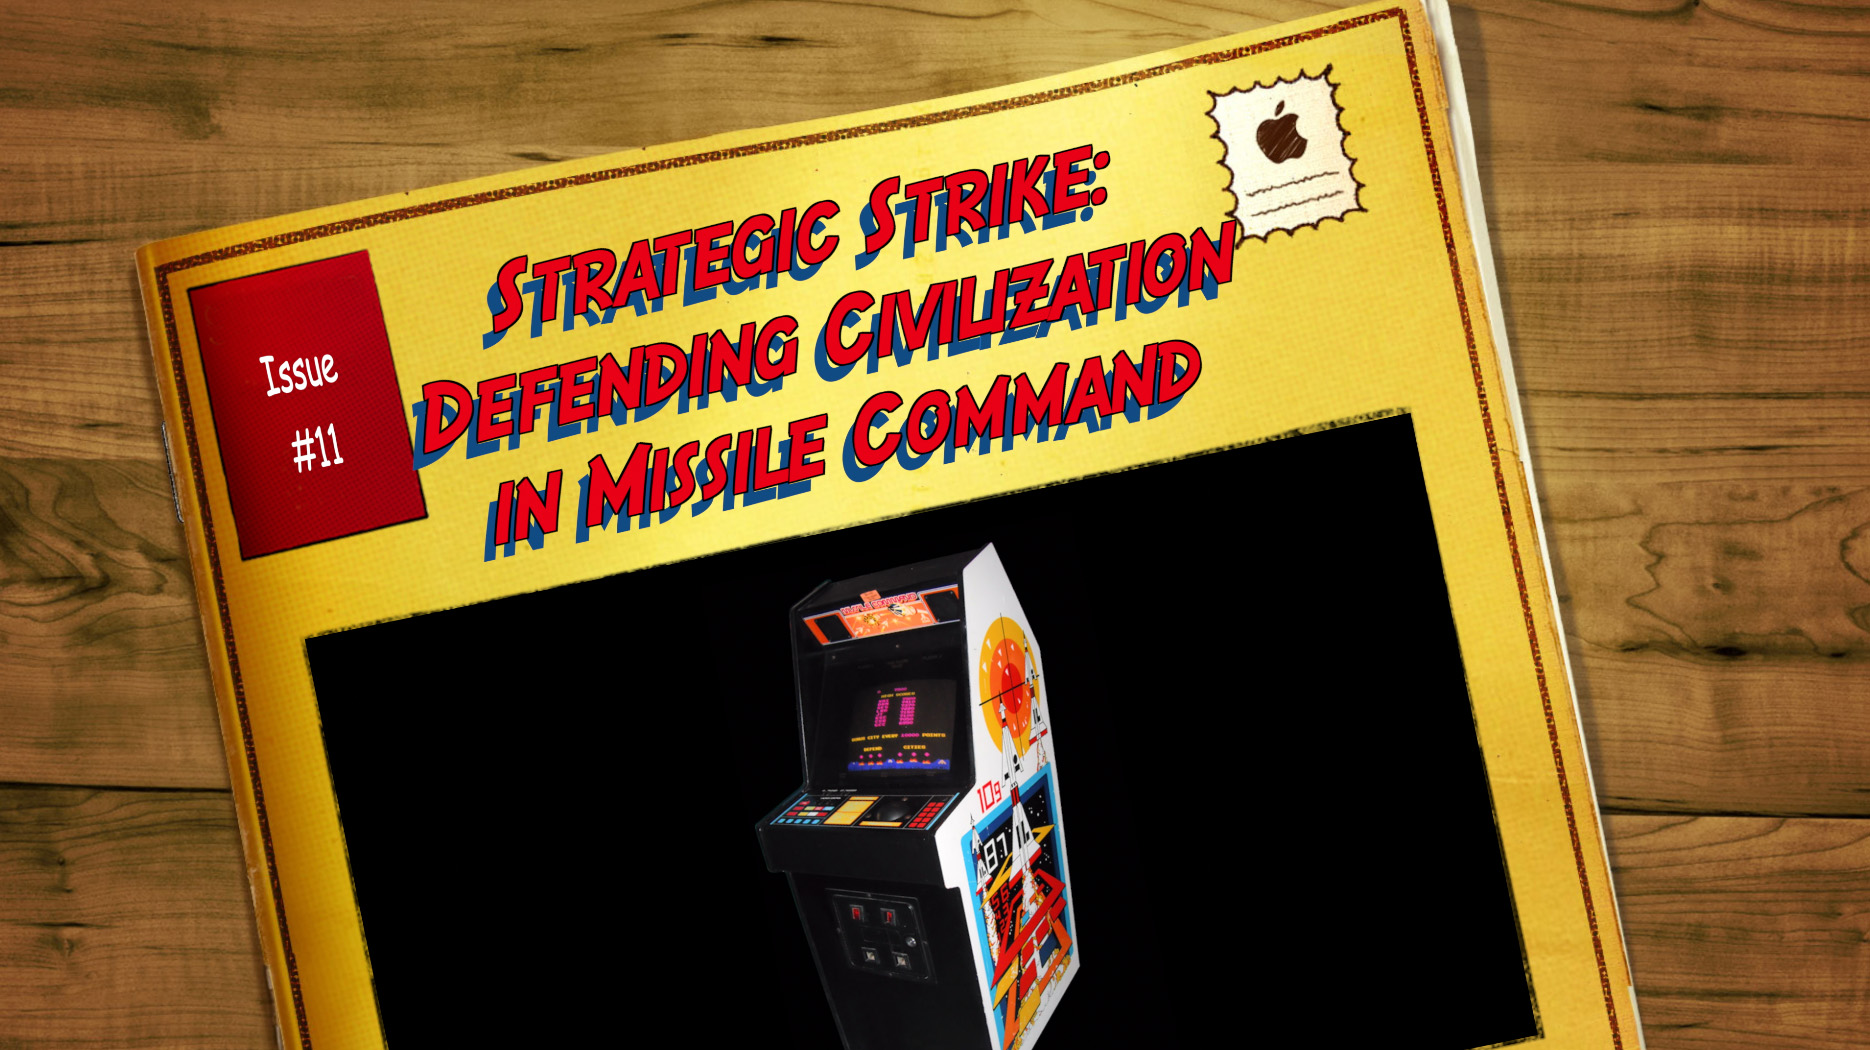 Issue #11 Strategic Strike: Defending Civilization in Missile Command